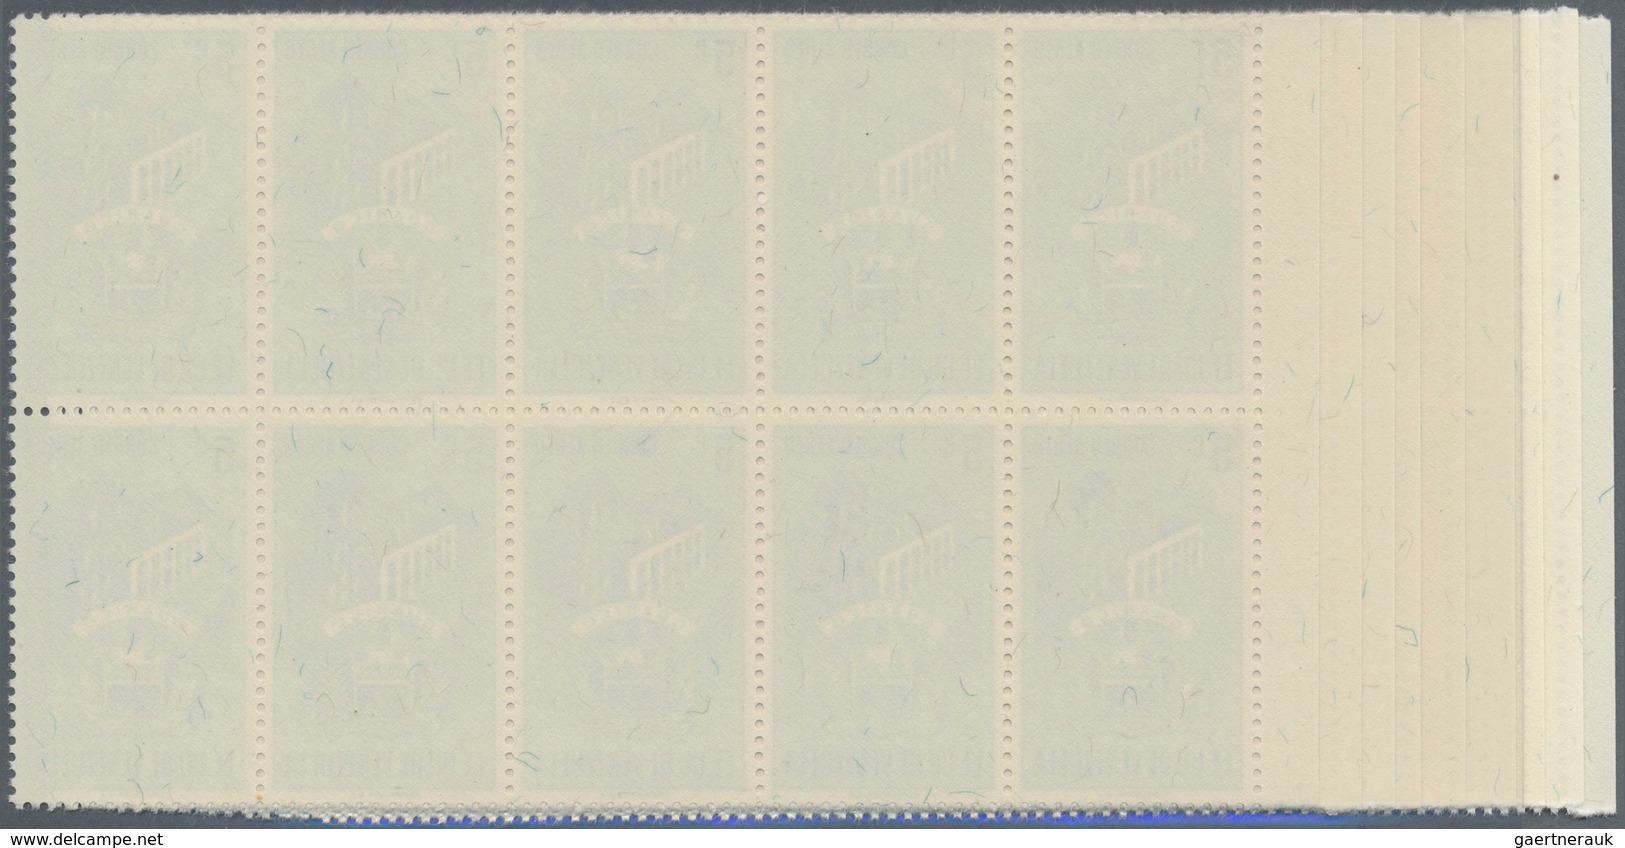 Venezuela: 1953, Coat Of Arms 'GUARICO‘ Airmail Stamps Complete Set Of Nine In Blocks Of Ten From Le - Venezuela